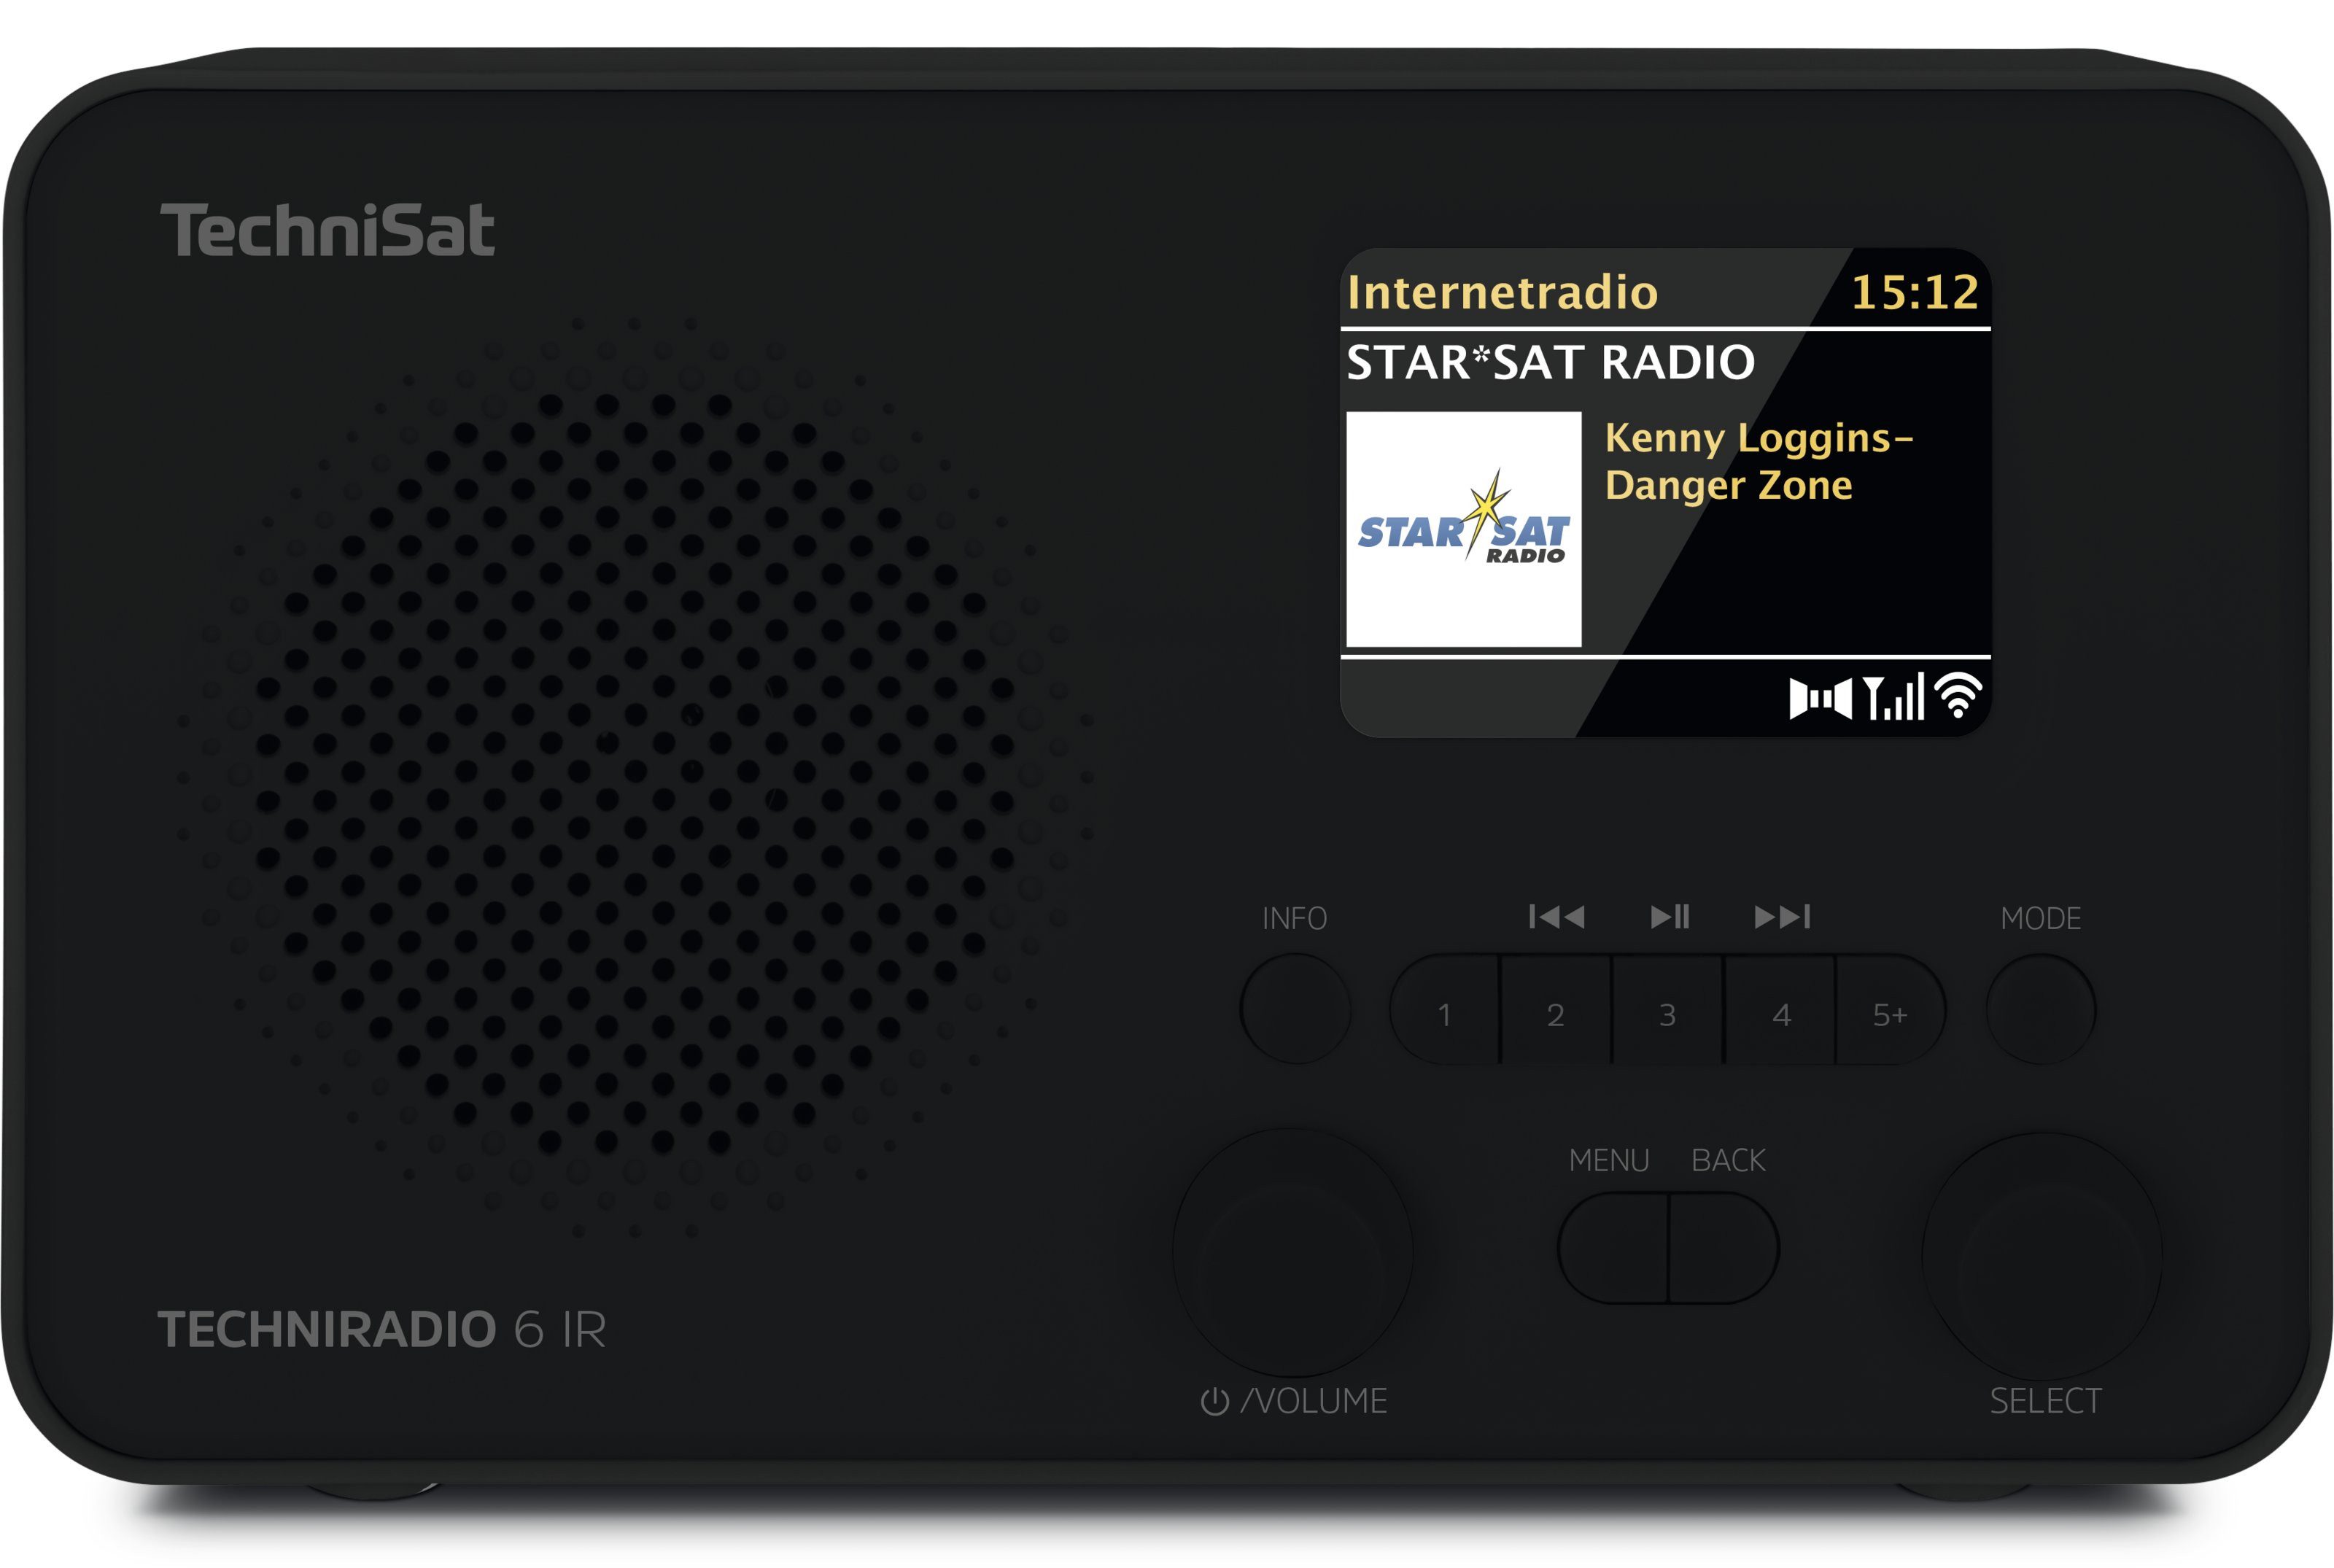 TechniSat TECHNIRADIO 6 IR Internet-Radio (Digitalradio (DAB), FM-Tuner, FM-Tuner mit RDS, Internetradio, 3,00 W, Bluetooth, Netzbetrieb, Akkubetrieb, Farbdisplay, DAB+, UKW, Wecker)